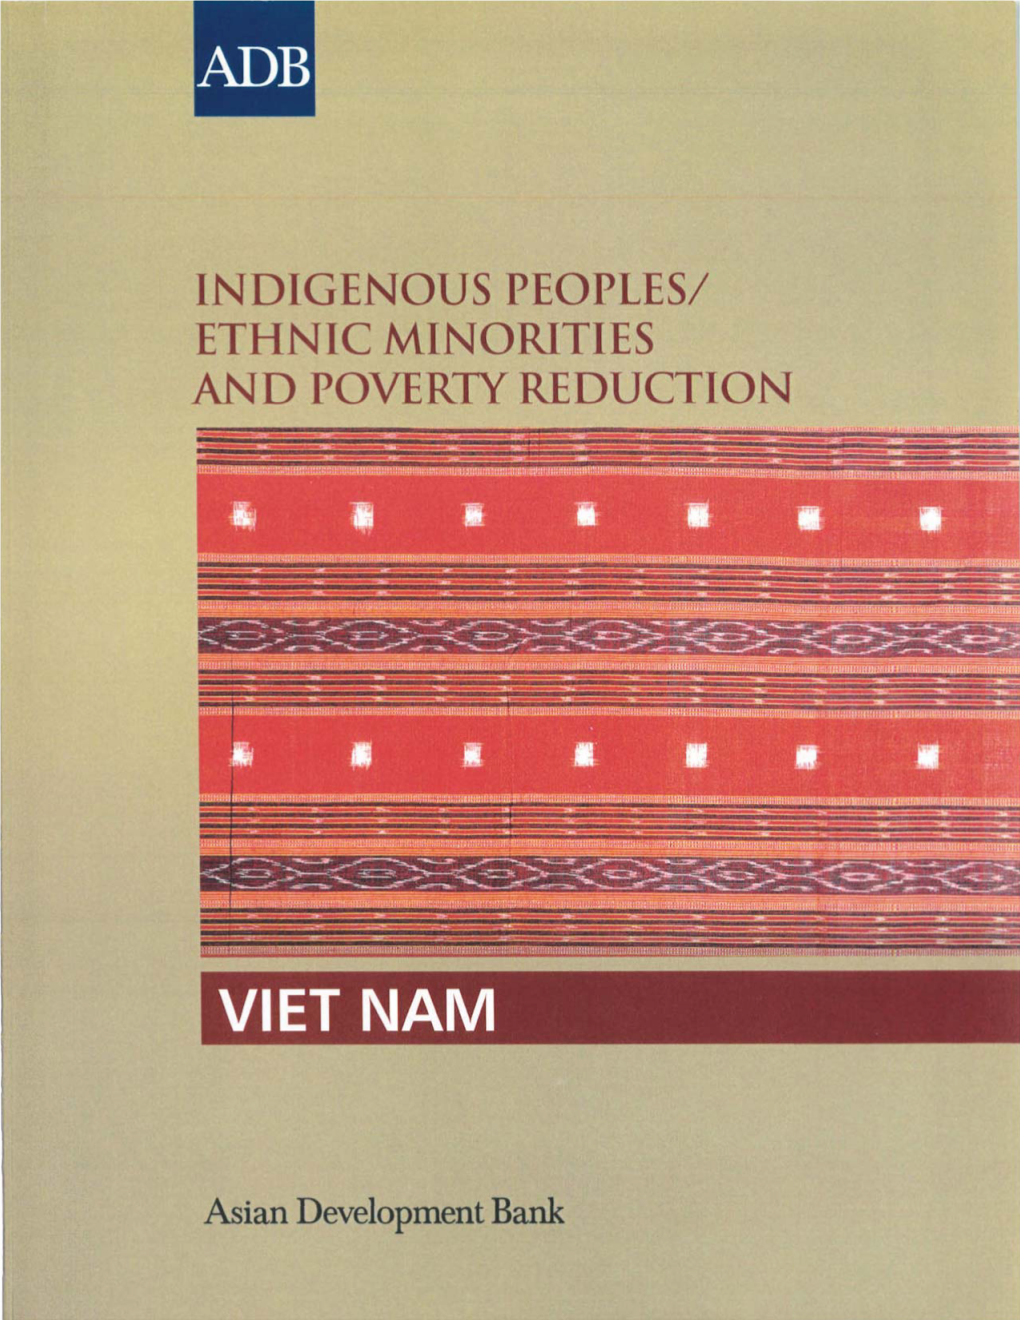 Indigenous People/Ethnic Minorities and Poverty Reduction: Viet